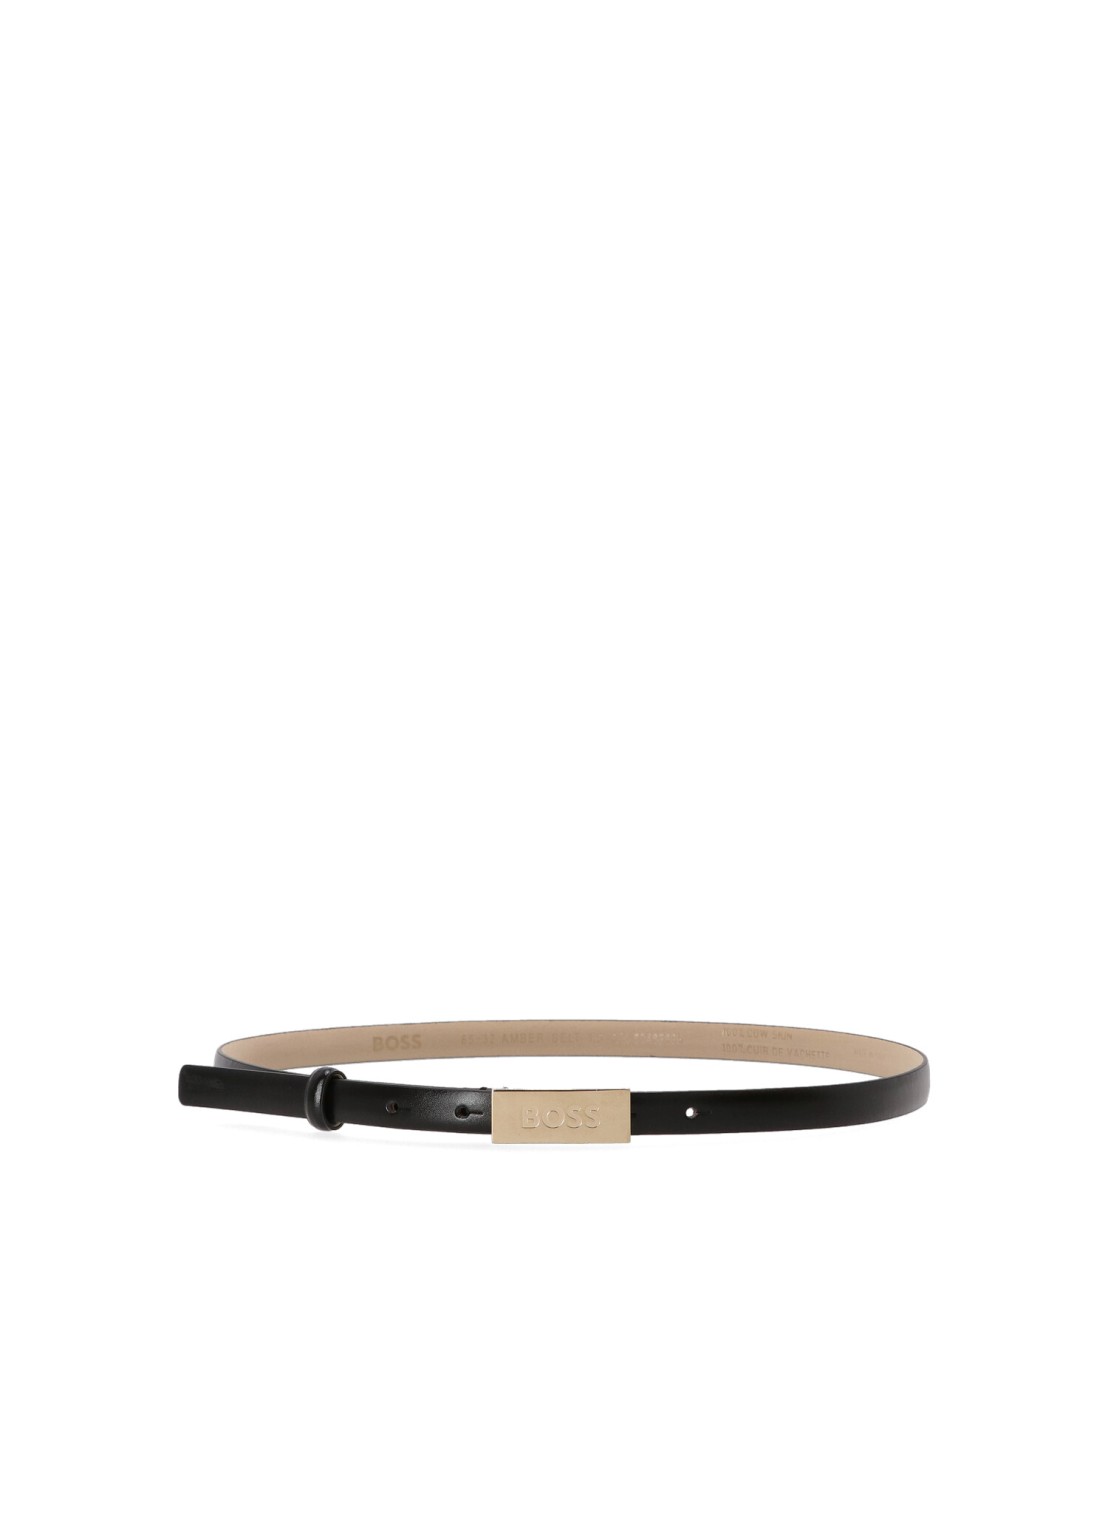 Amber Belt 1,5cm